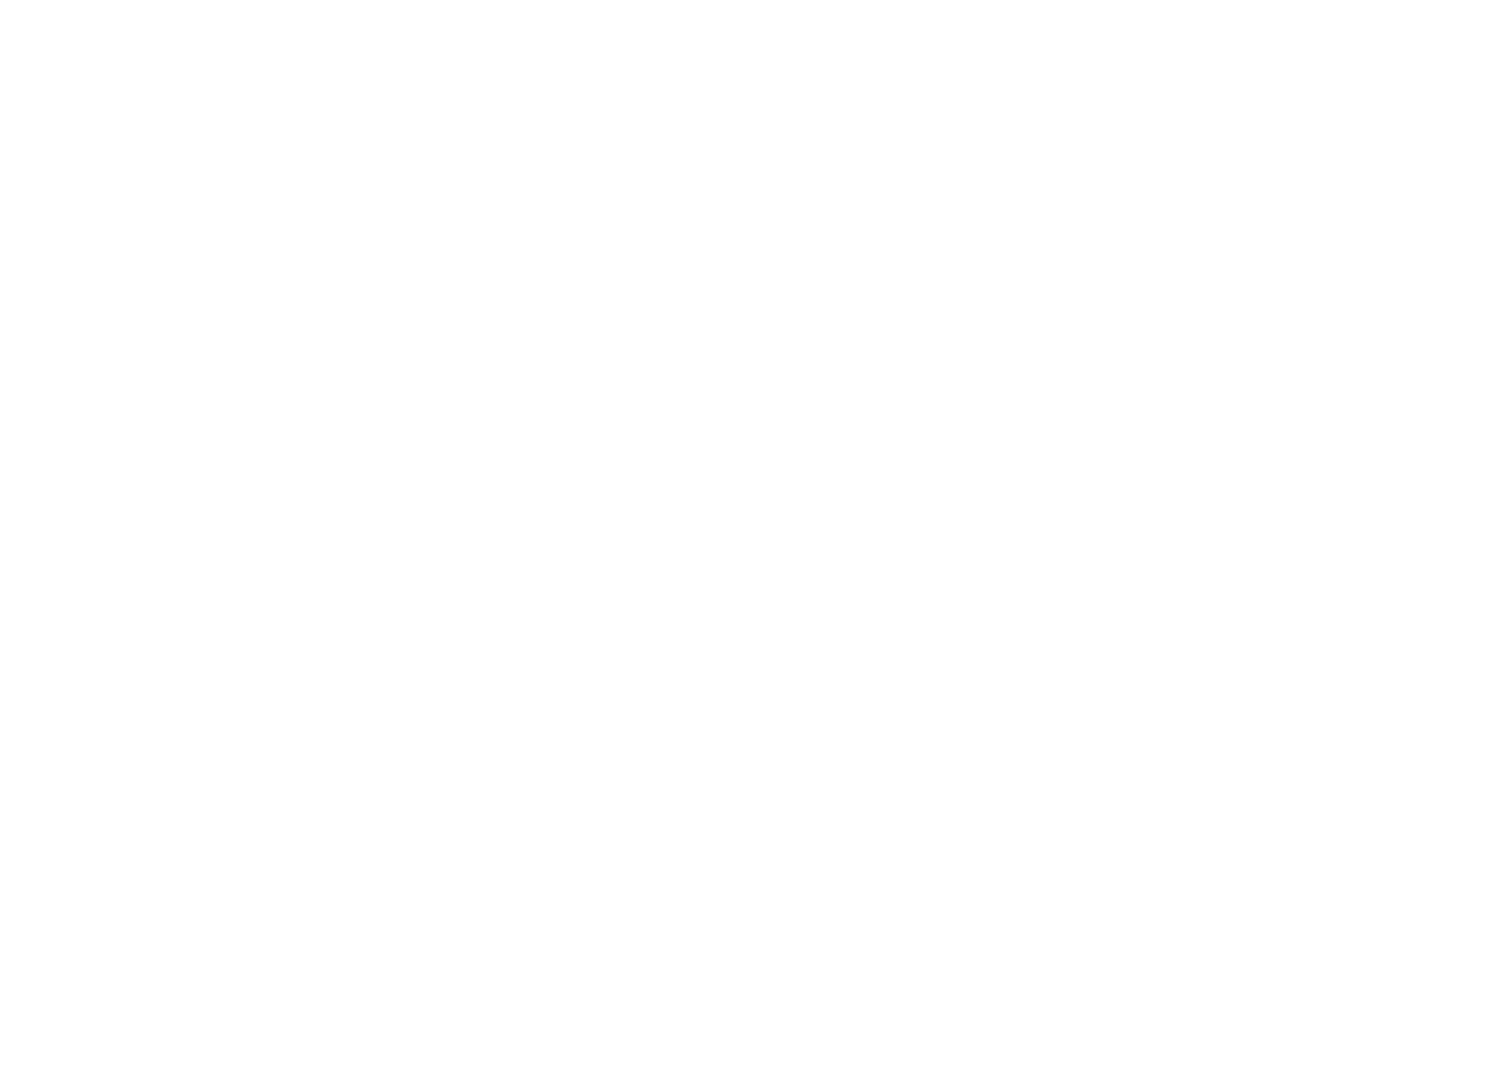 Bird City Comedy Festival